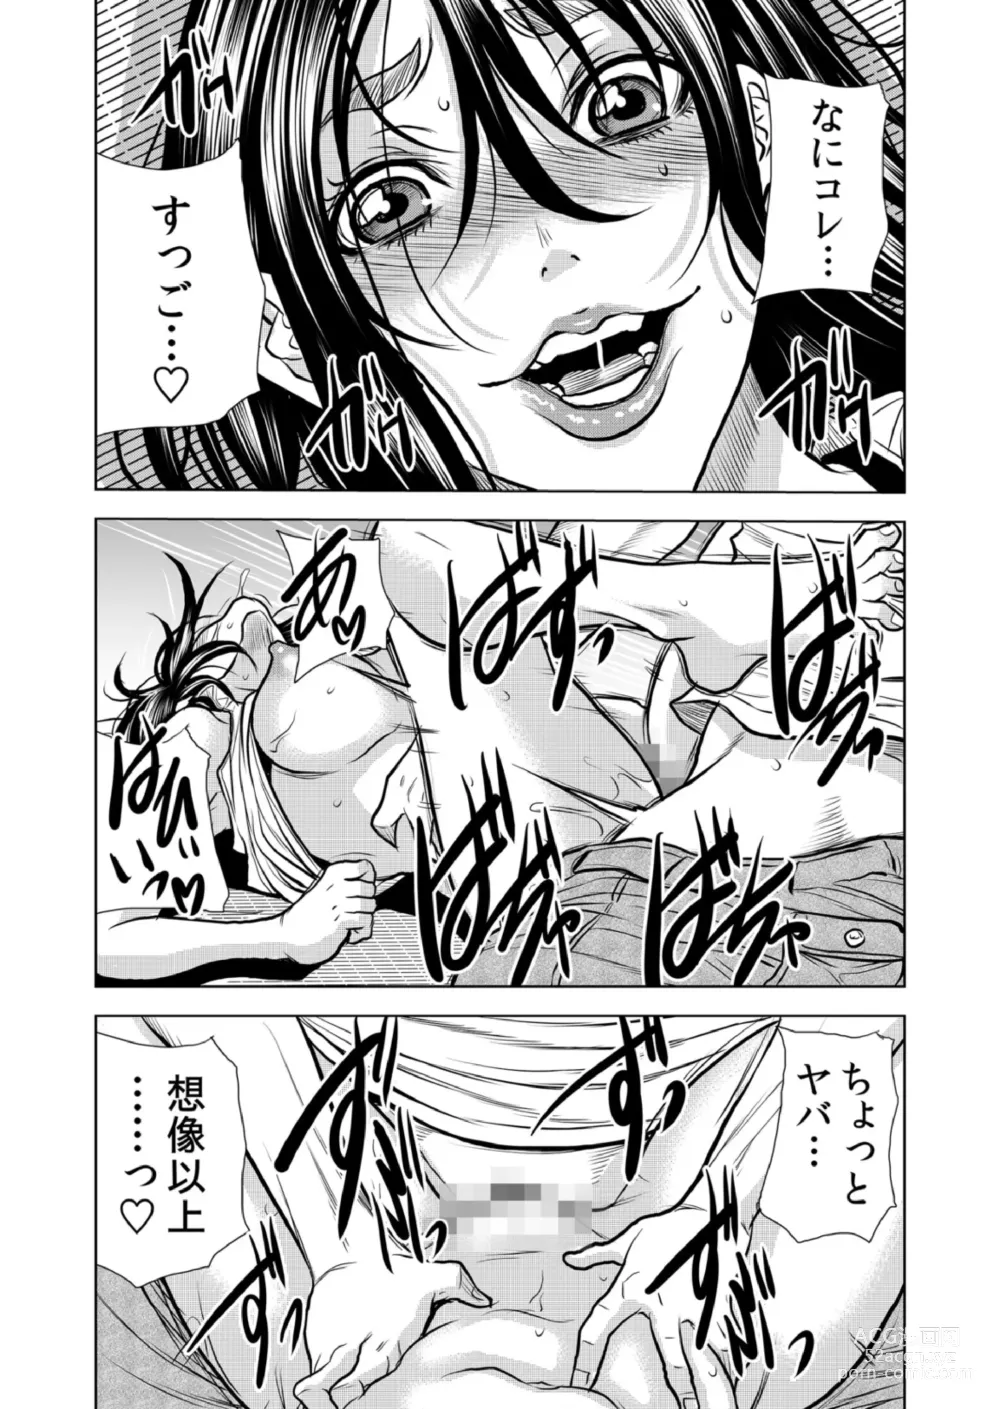 Page 66 of manga Mamasan,yobai ha OK desuka? VOL9